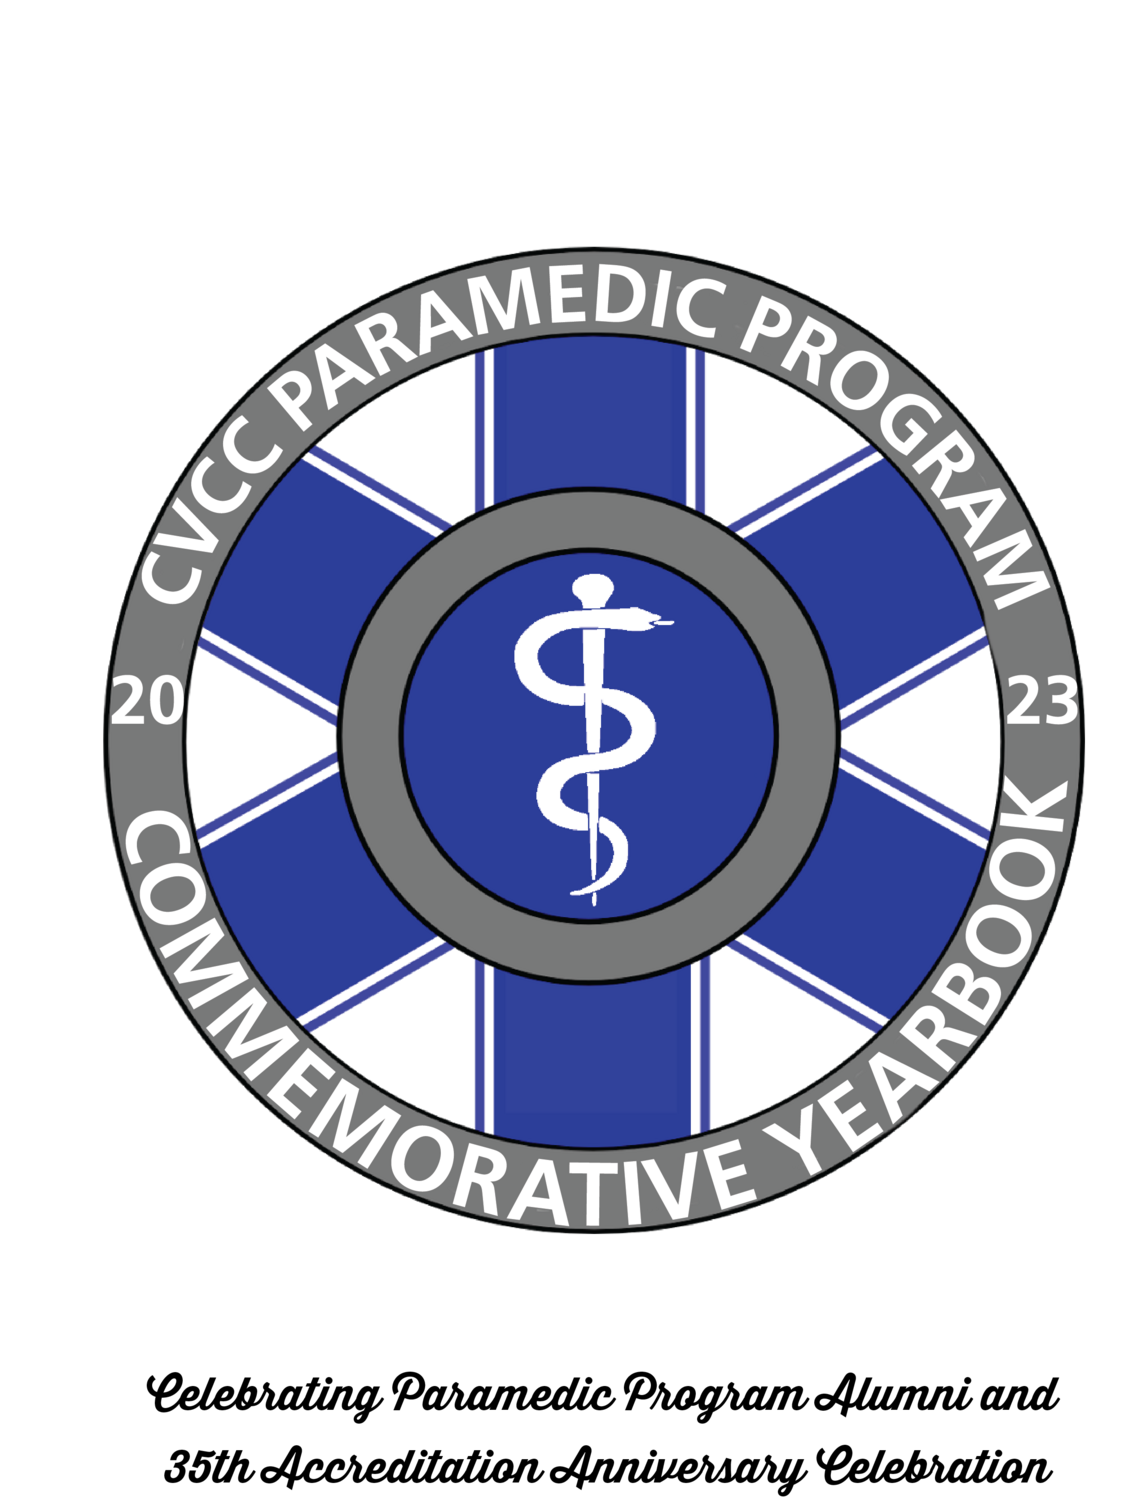 Paramedic Program Commemorative Book Ad: Full Page Ad 8.5"x11" COLOR